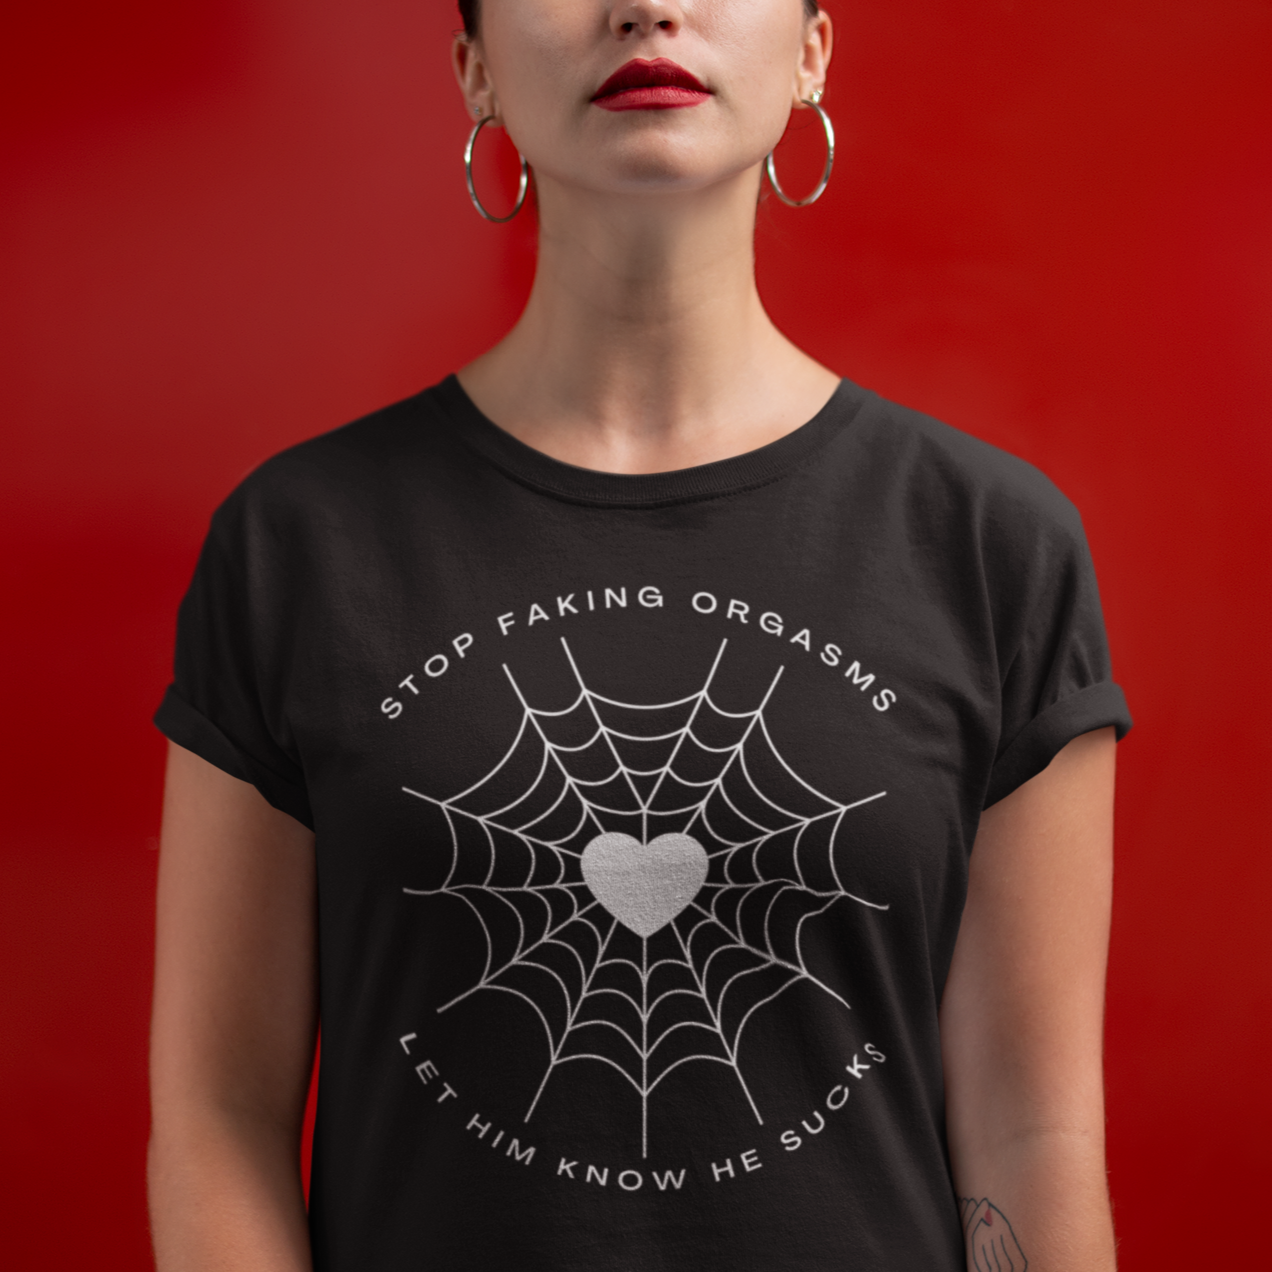 Stop Faking Orgasms Unisex Feminist T-shirt - Shop Women’s Rights T-shirts - Feminist Trash Store